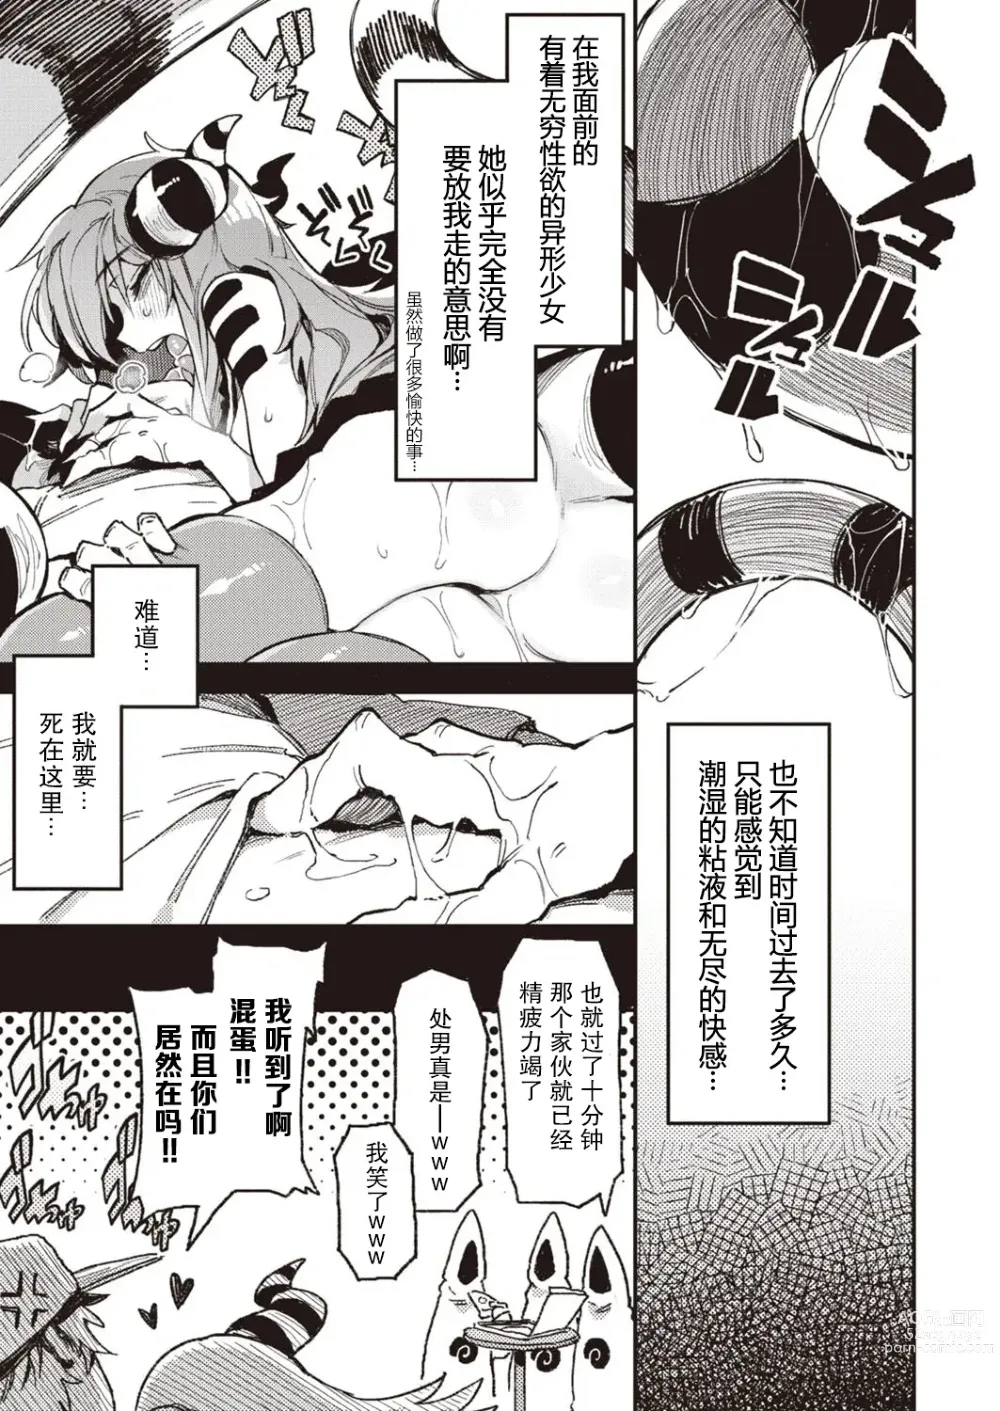 Page 39 of manga Inogami